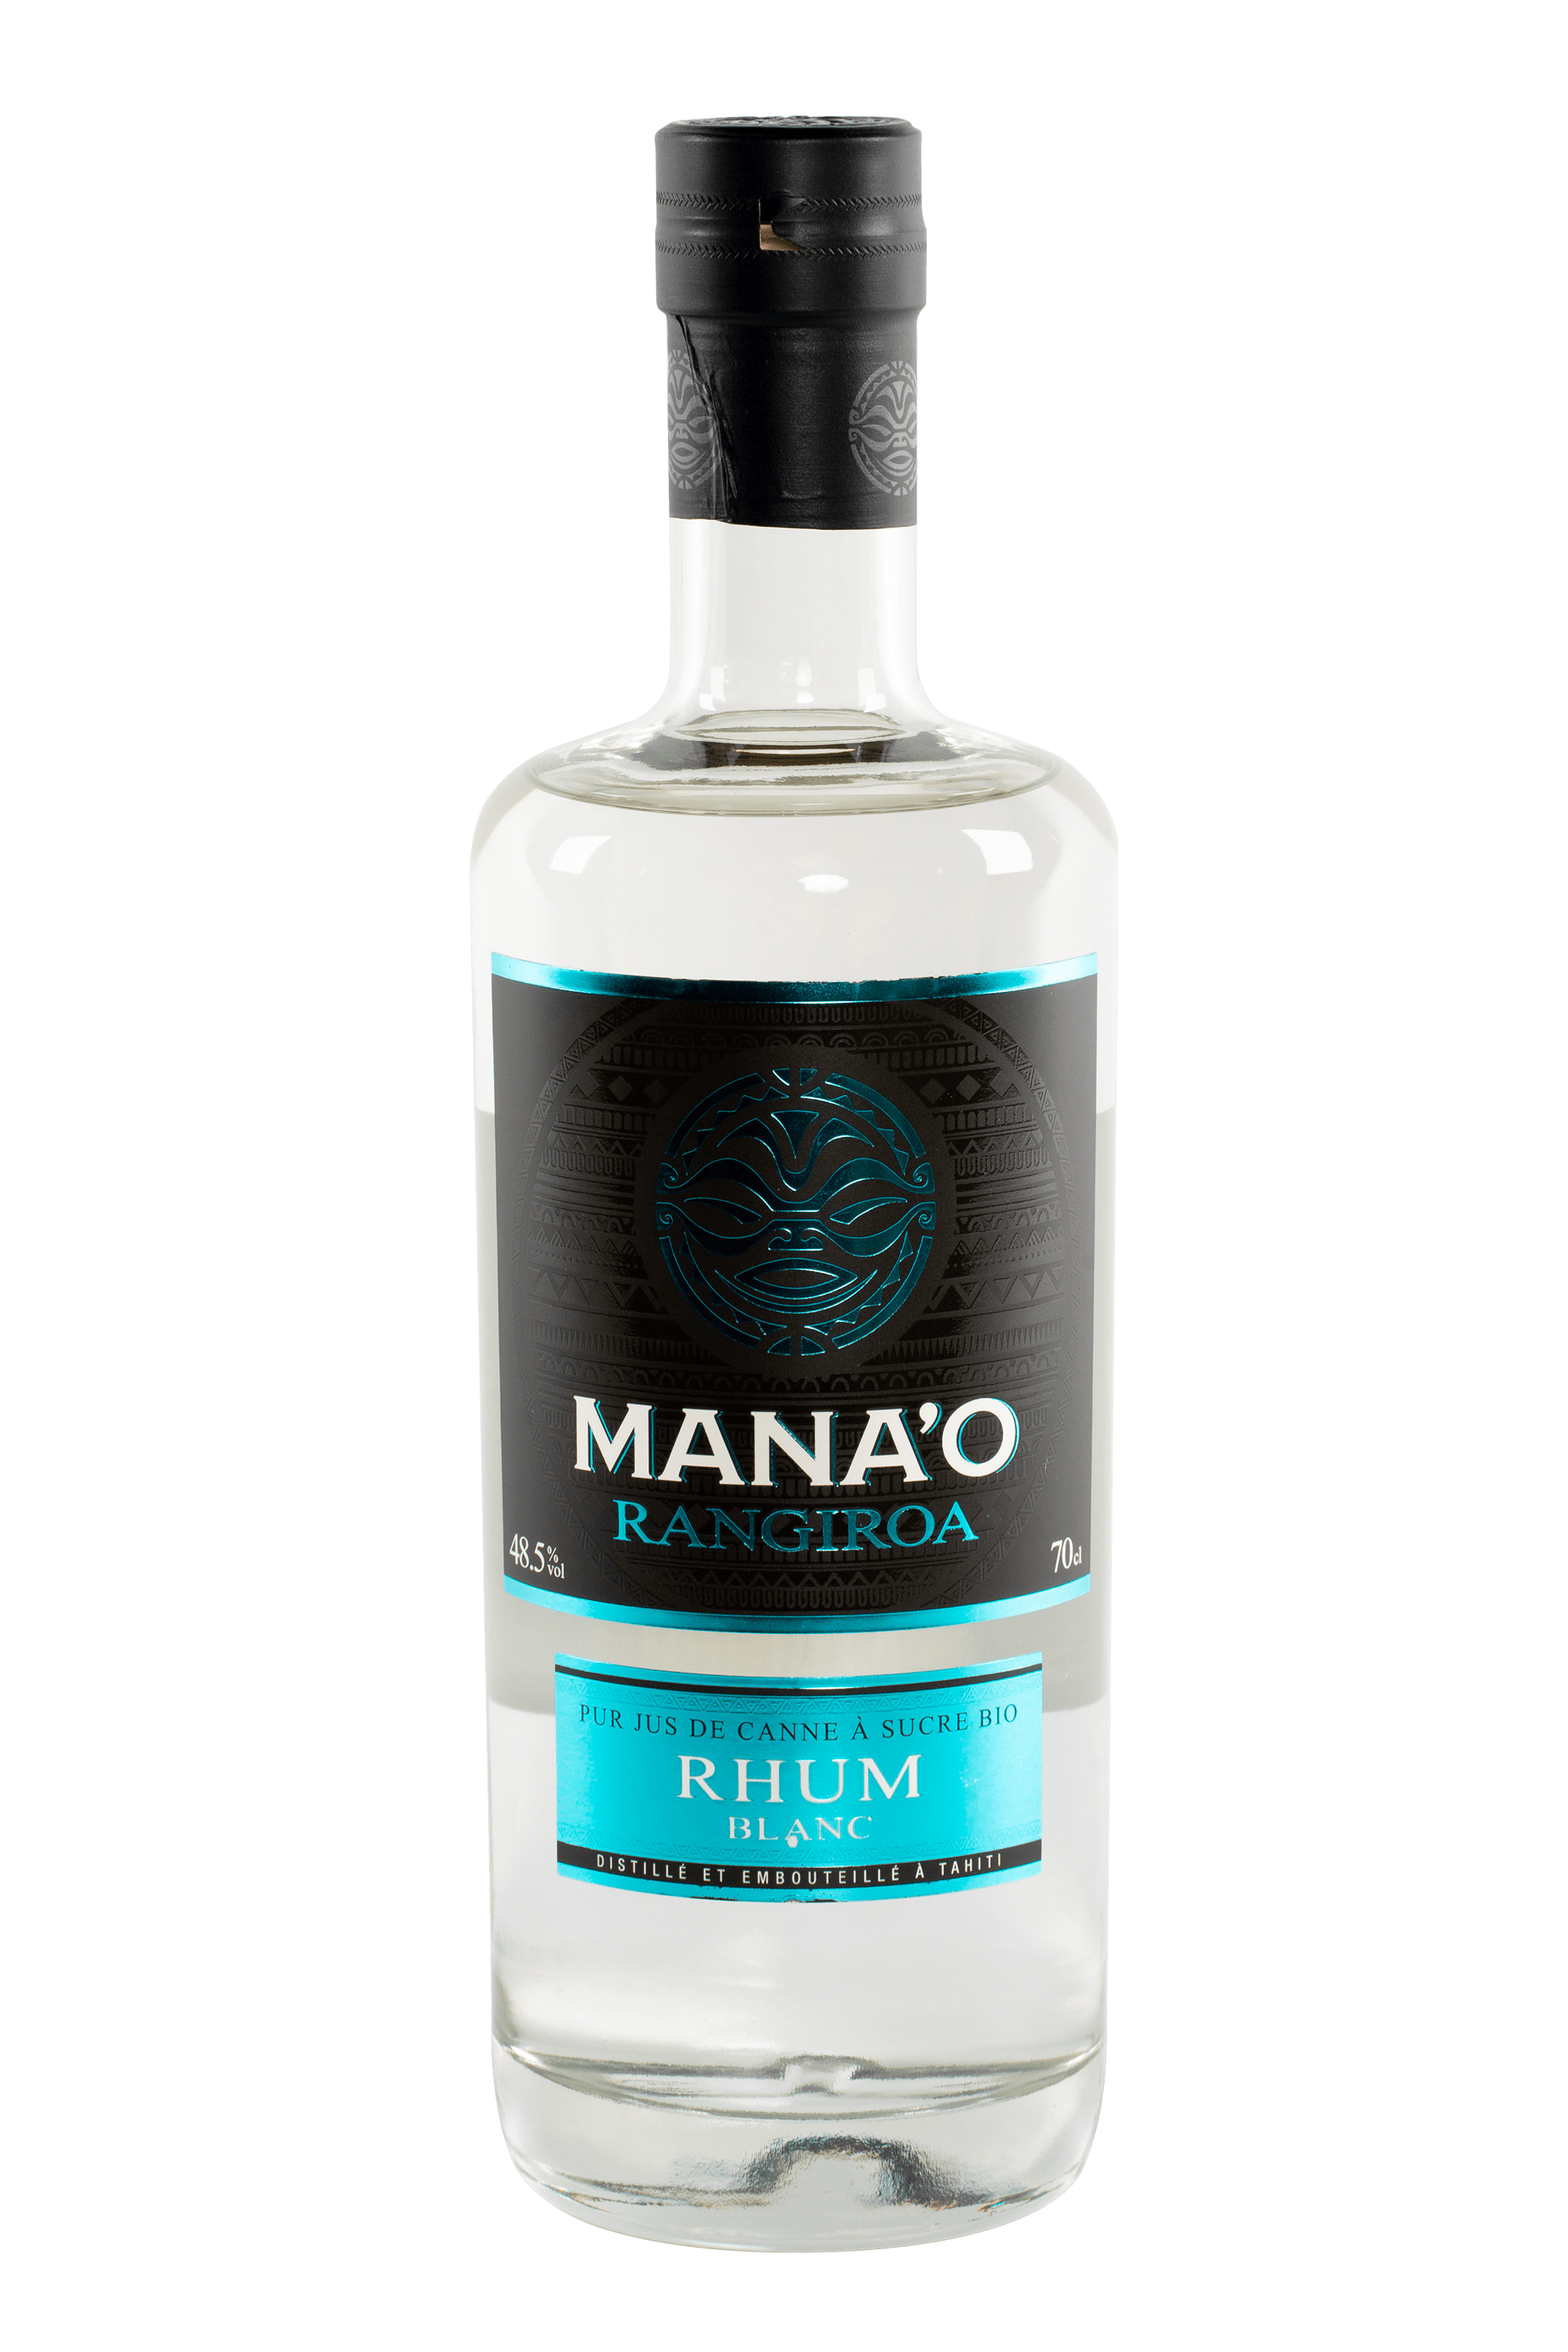 Bouteille de rhum blanc bio français de Rangiroa de la distillerie Mana'o à Tahiti